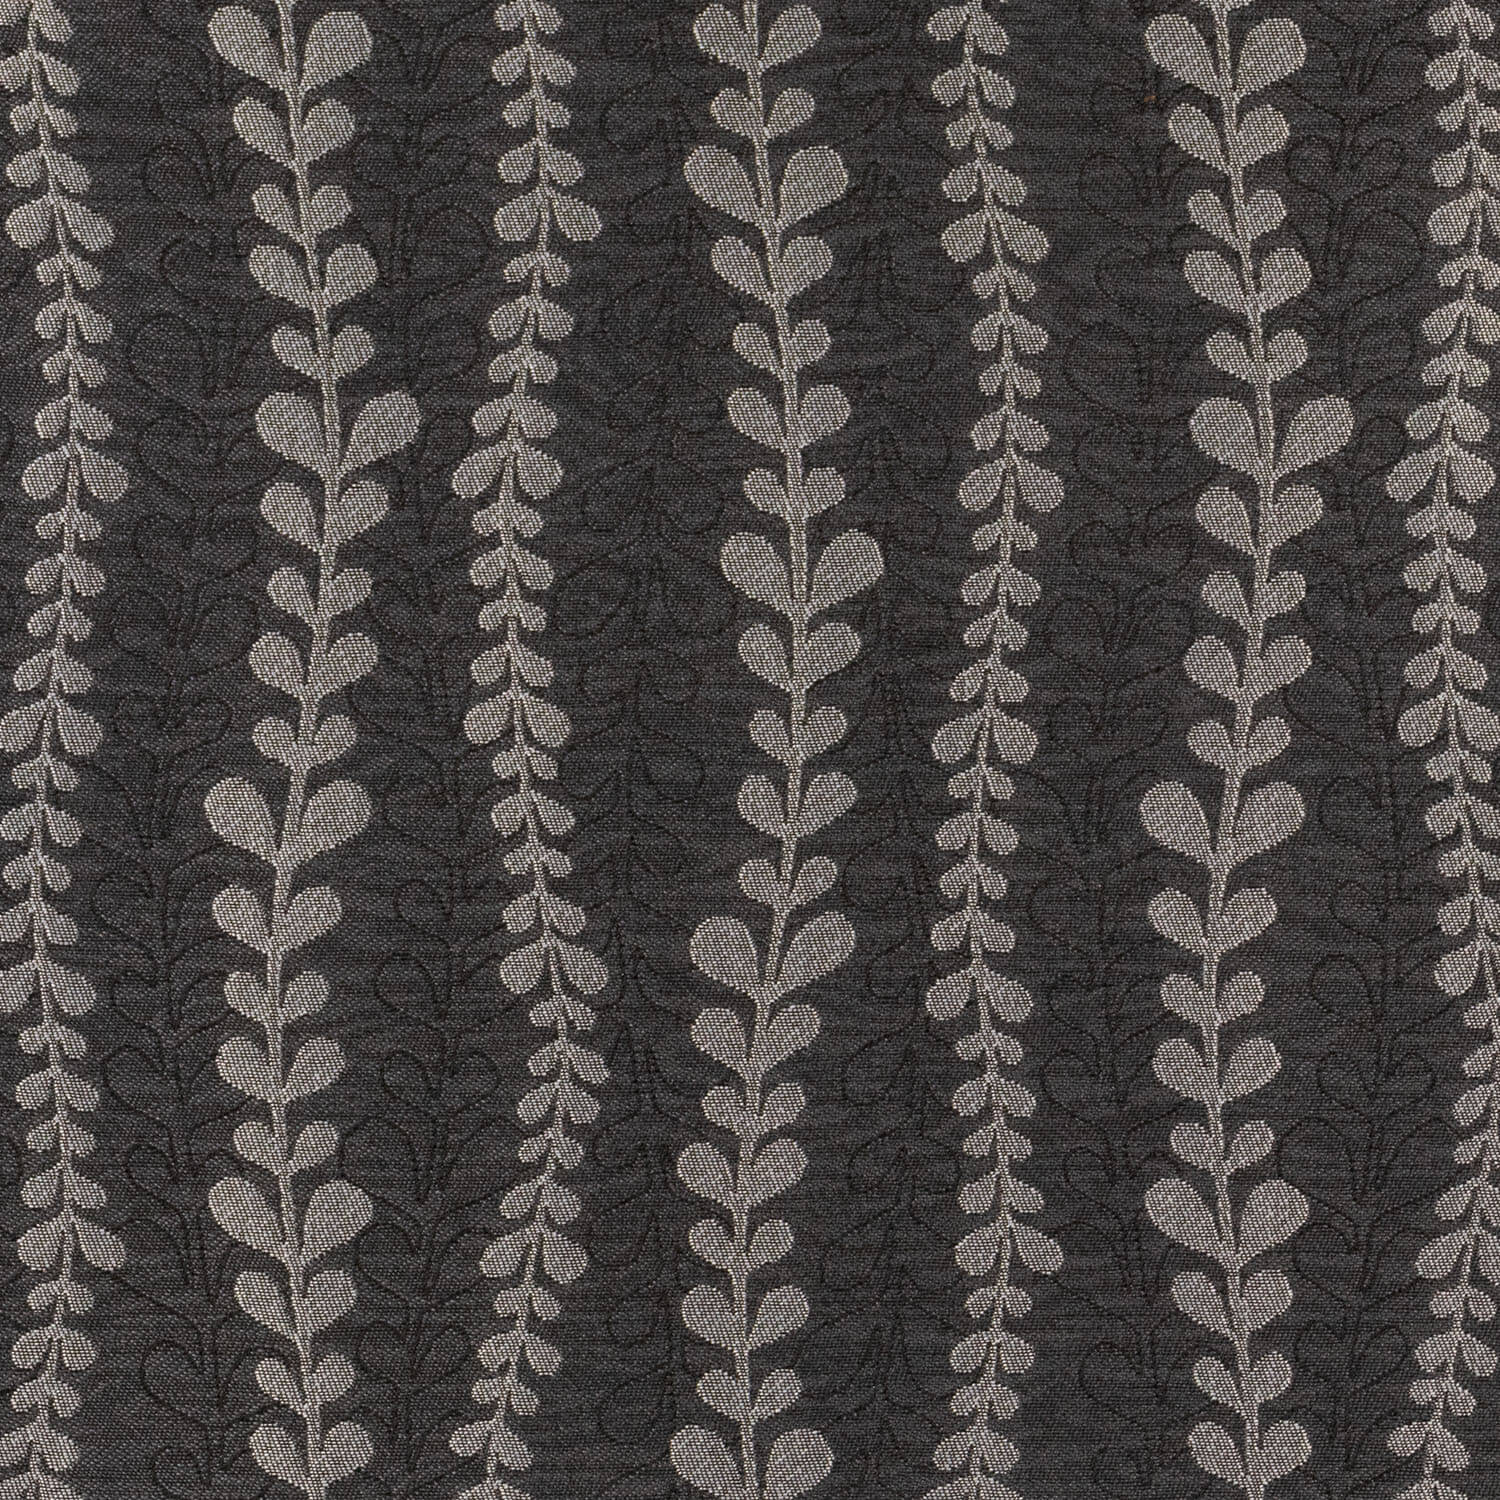 Moonsail Black jacquard fabric